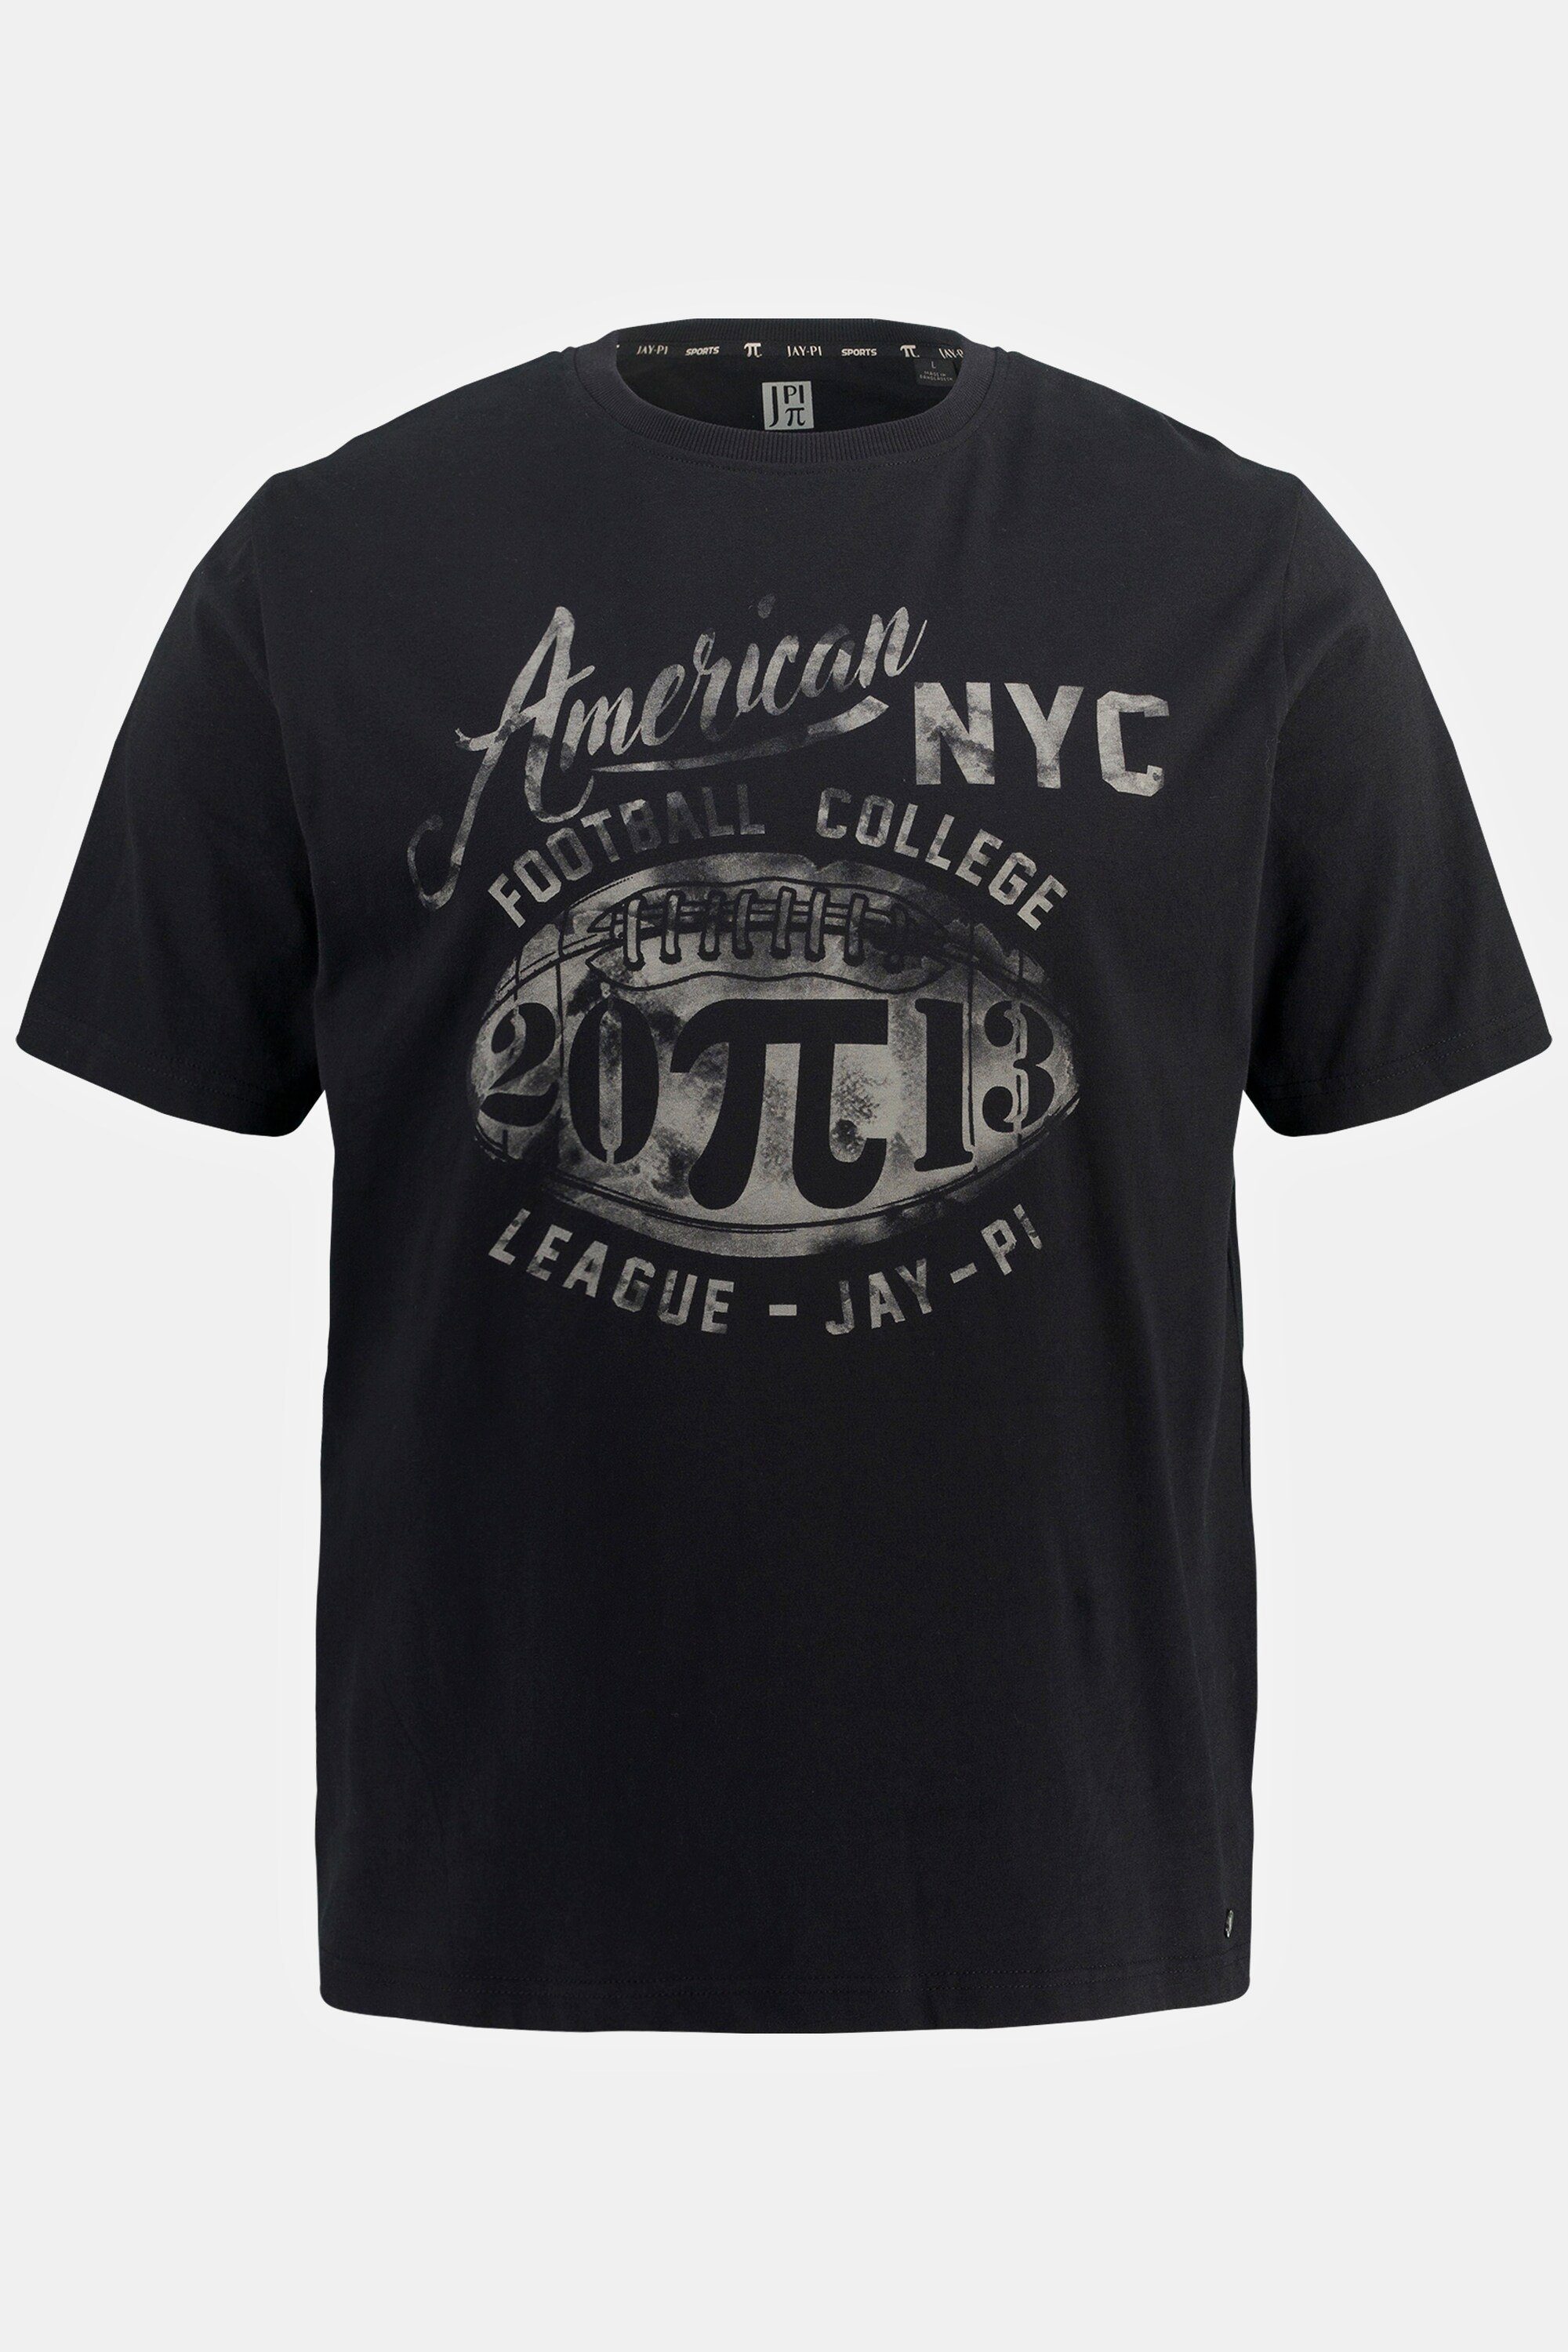 Halbarm JP1880 American Rundhals T-Shirt Football T-Shirt